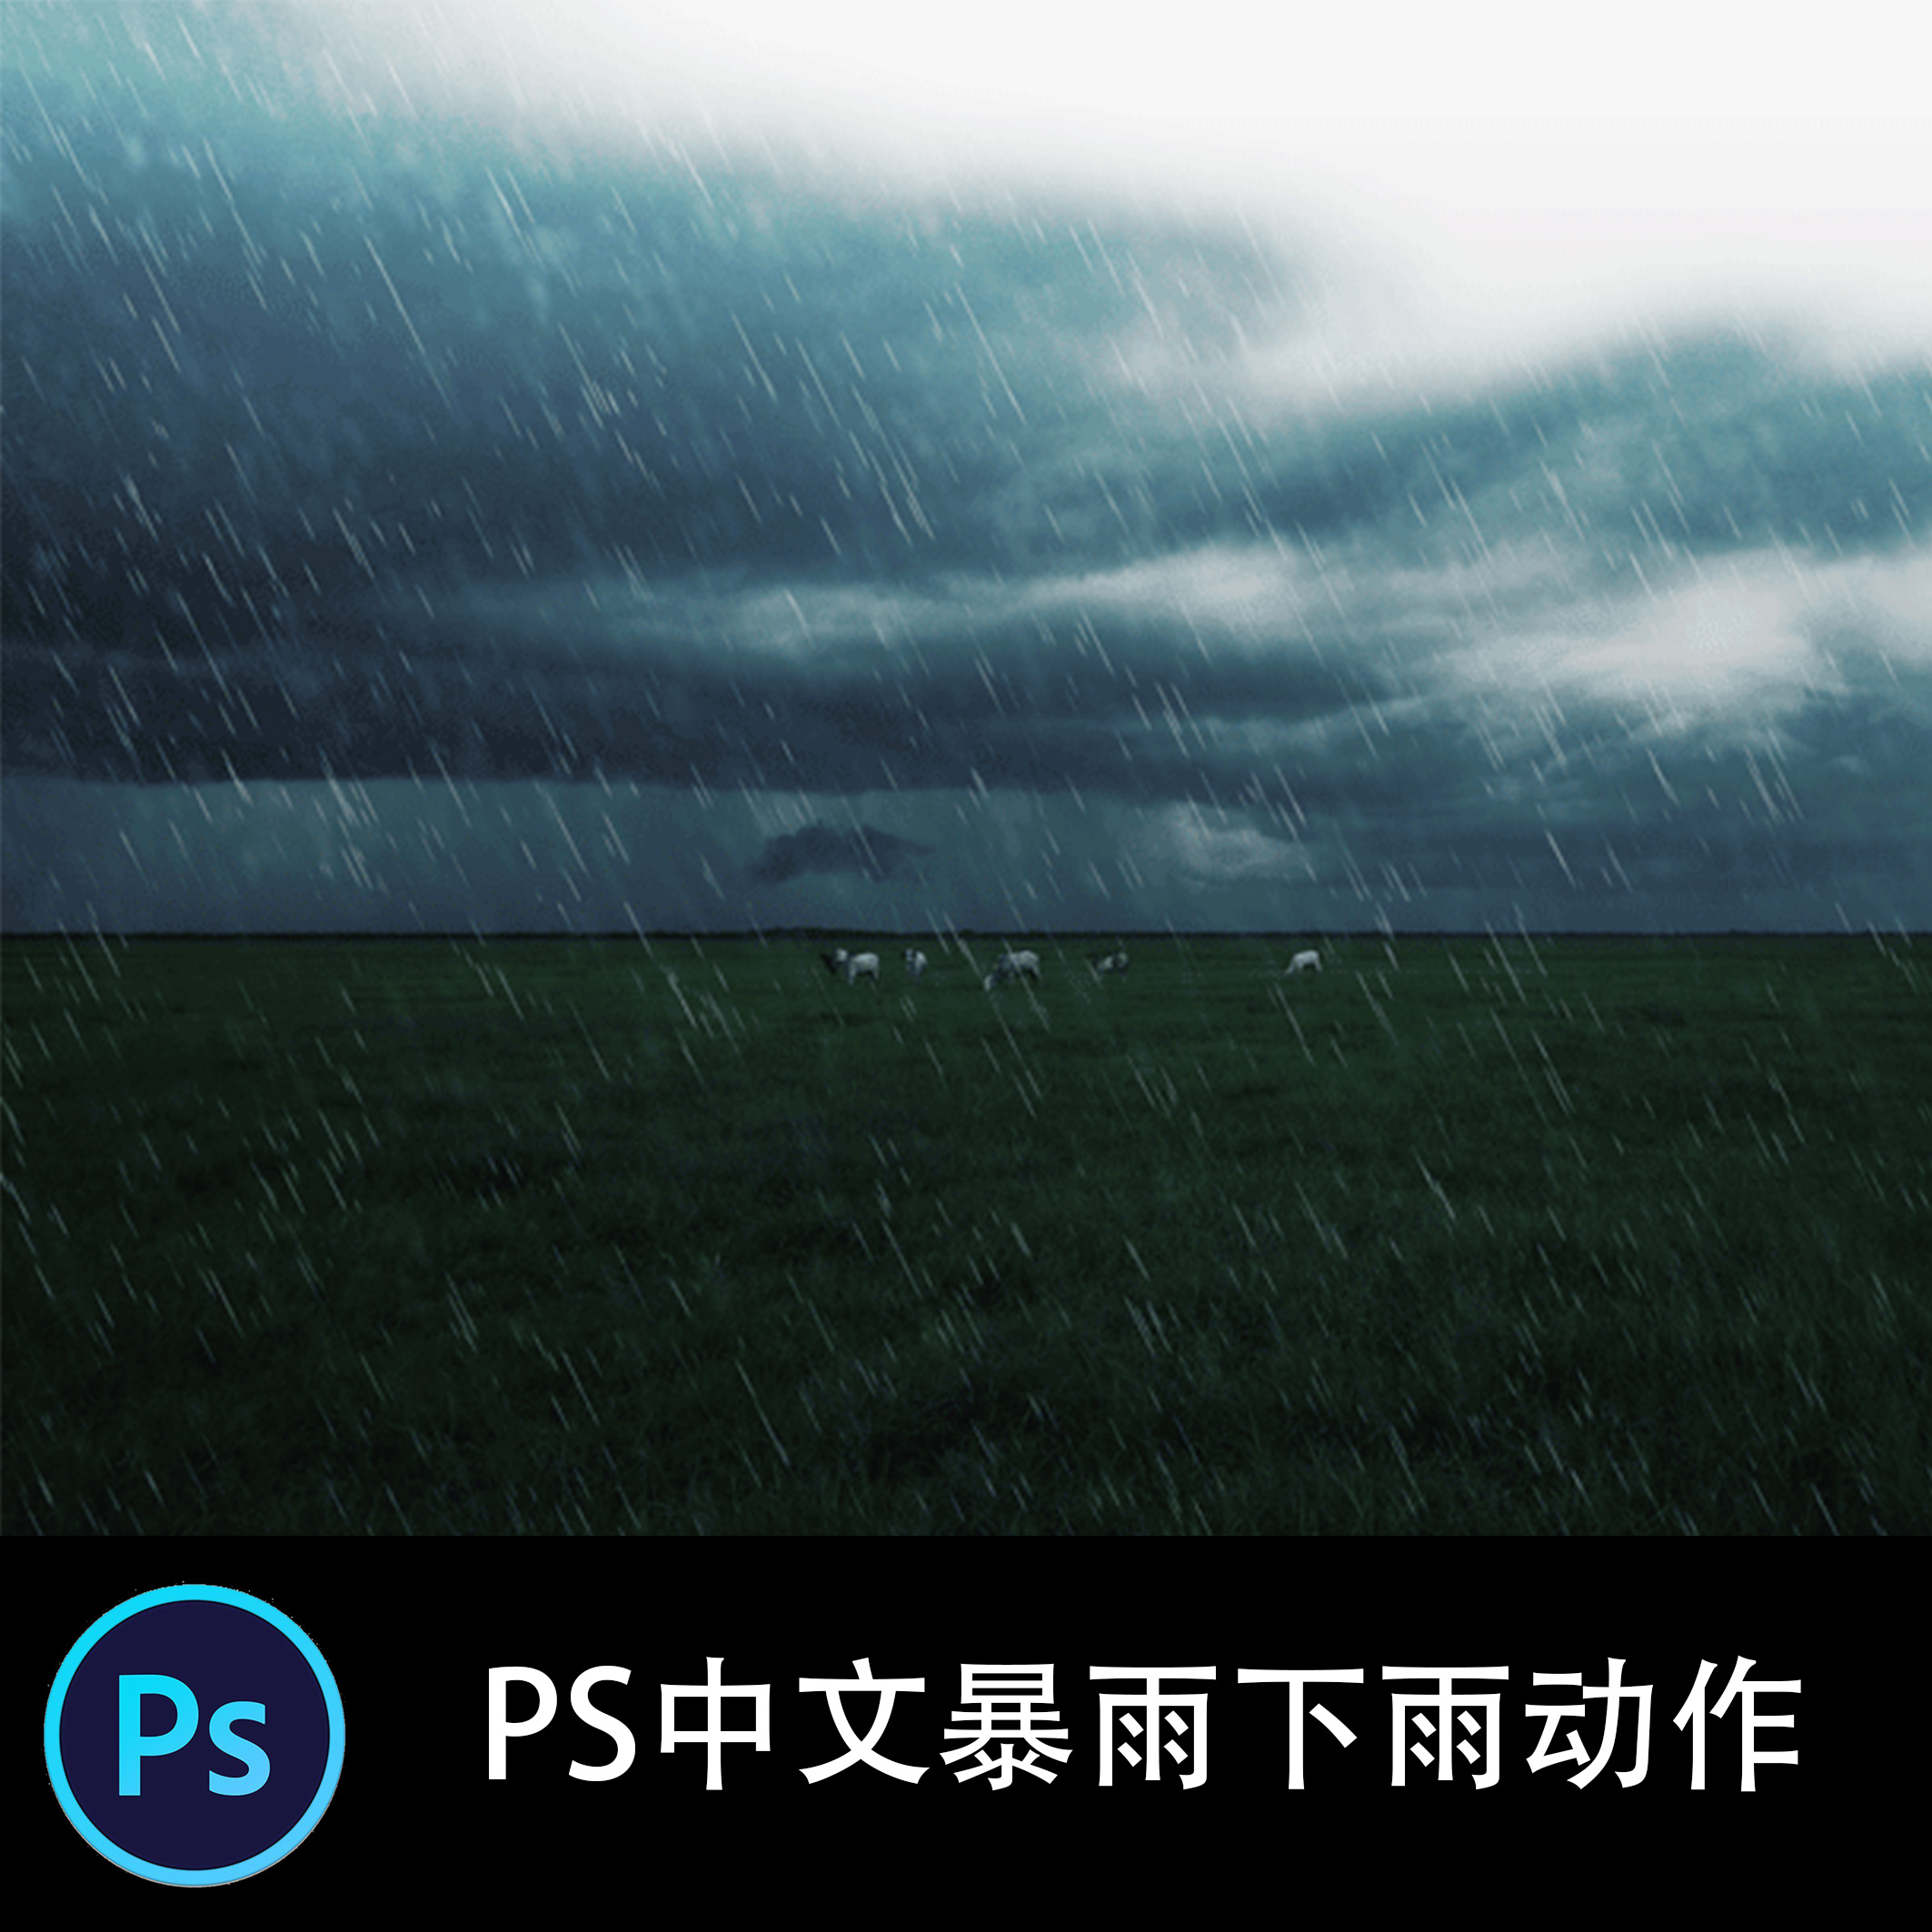 PS中文特效动作 暴雨下雨大雨GIF动态效果 摄影滤镜笔刷插件素材